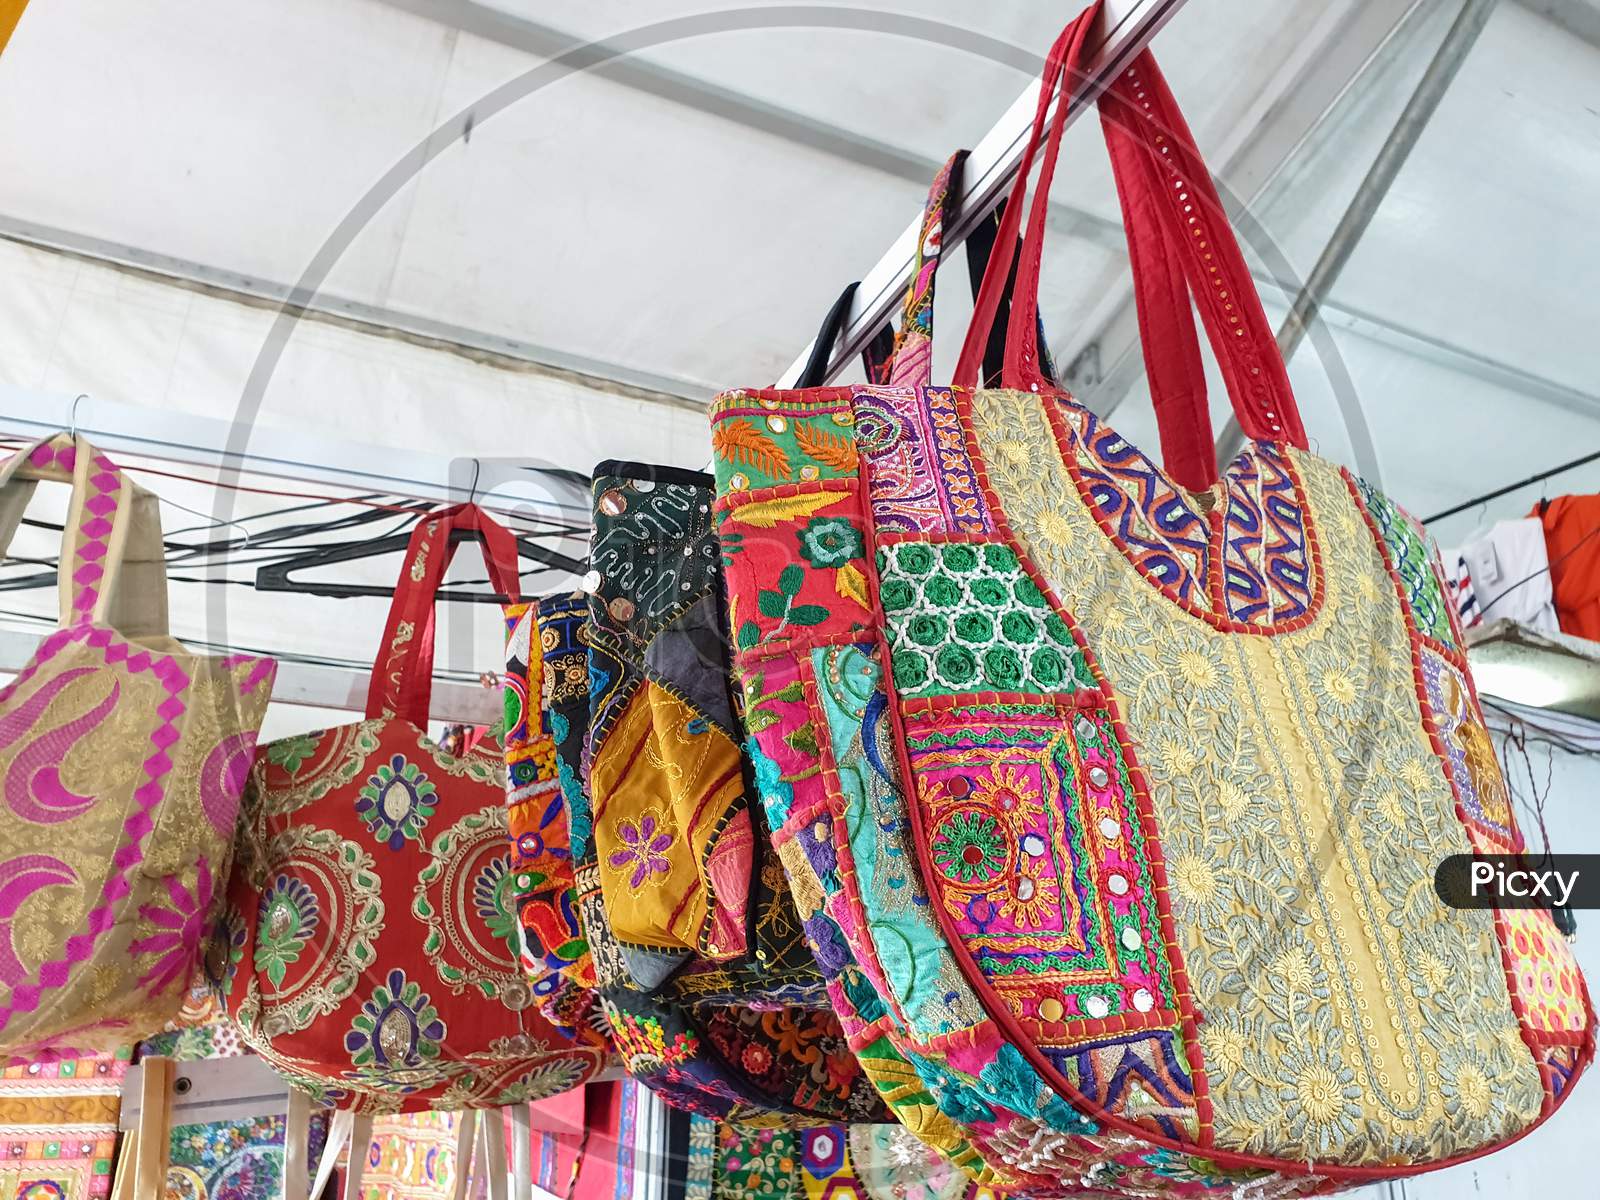 Mandi, Himachal Pradesh / India - 03 07 2020: Photo of variety of colorful Rajasthani artwork handbags hanging in the store for sale